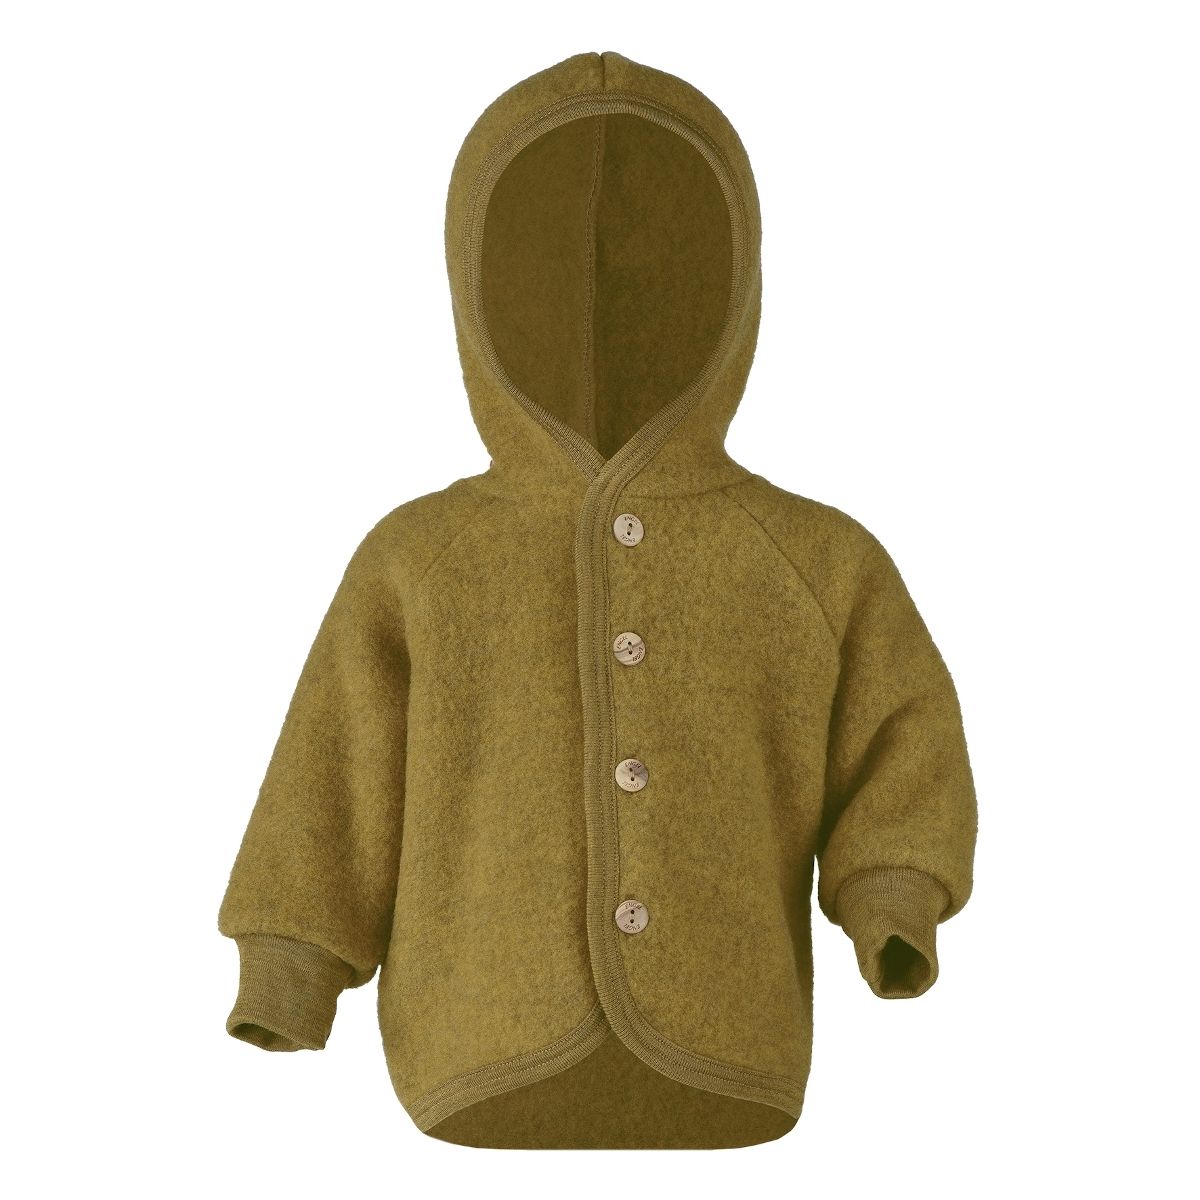 ENGEL Natur Hooded jacket with wooden buttons Saffron melange 575520-018E 